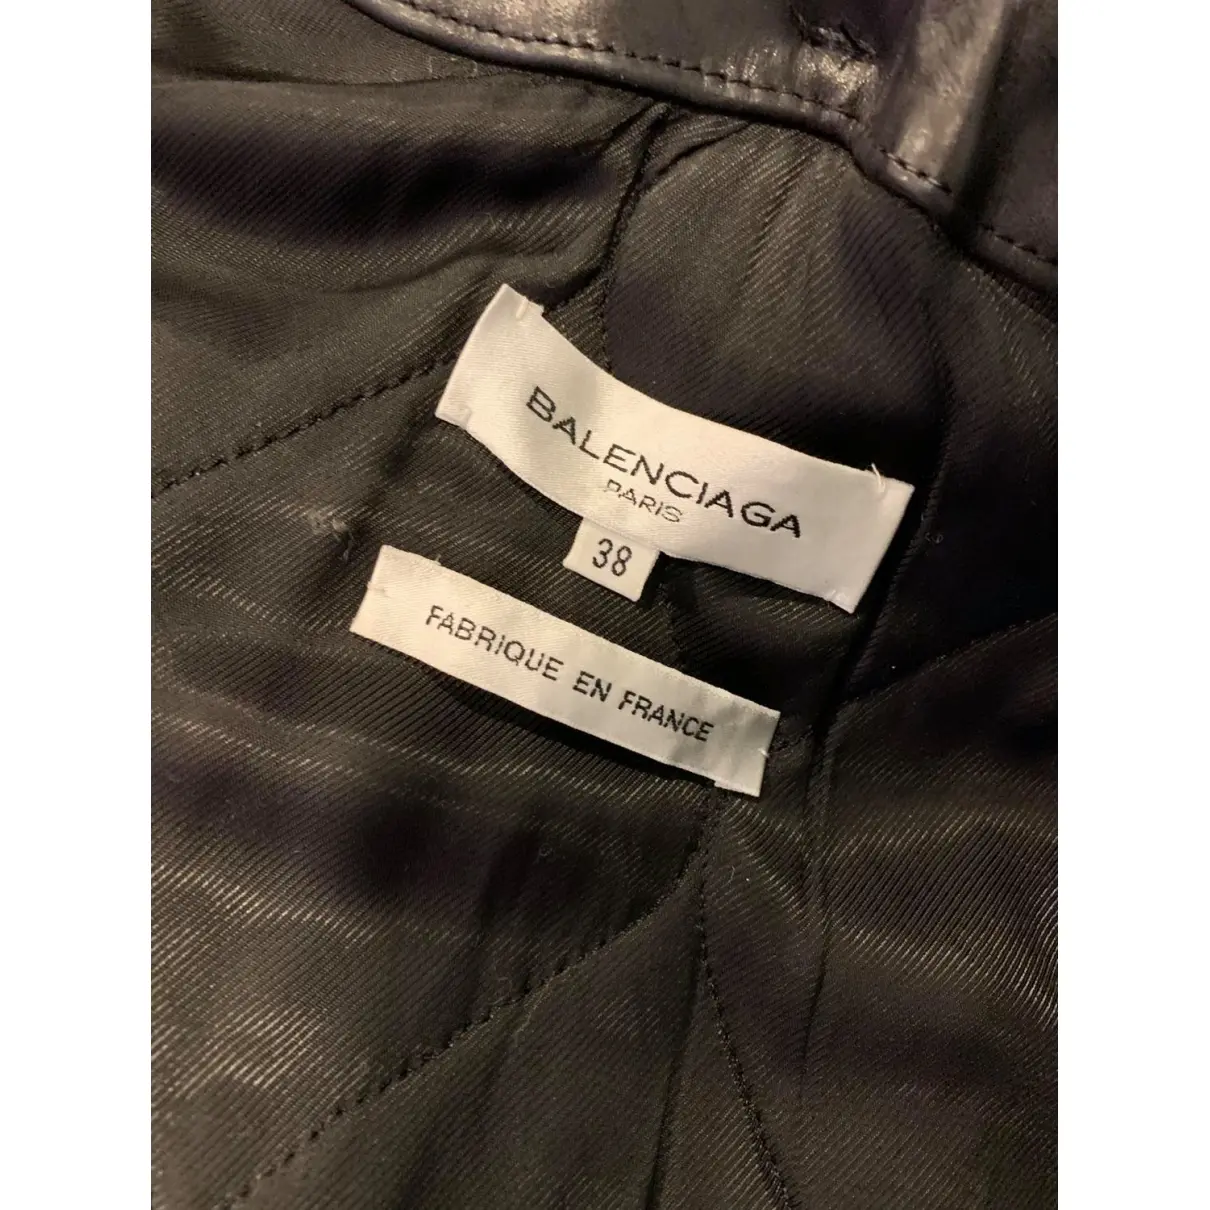 Buy Balenciaga Leather jacket online - Vintage